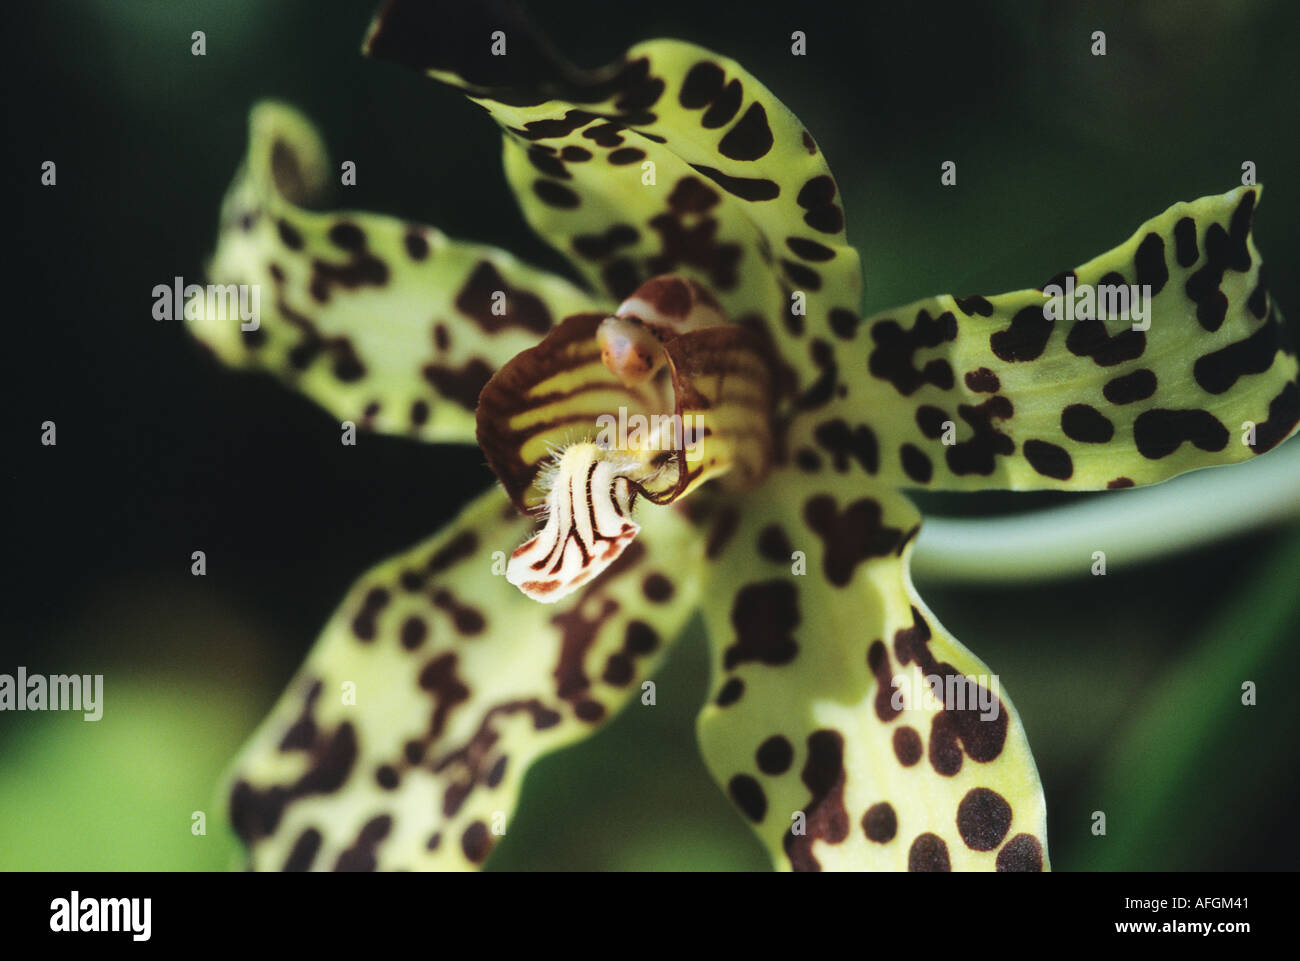 dendrobium orchid Stock Photo